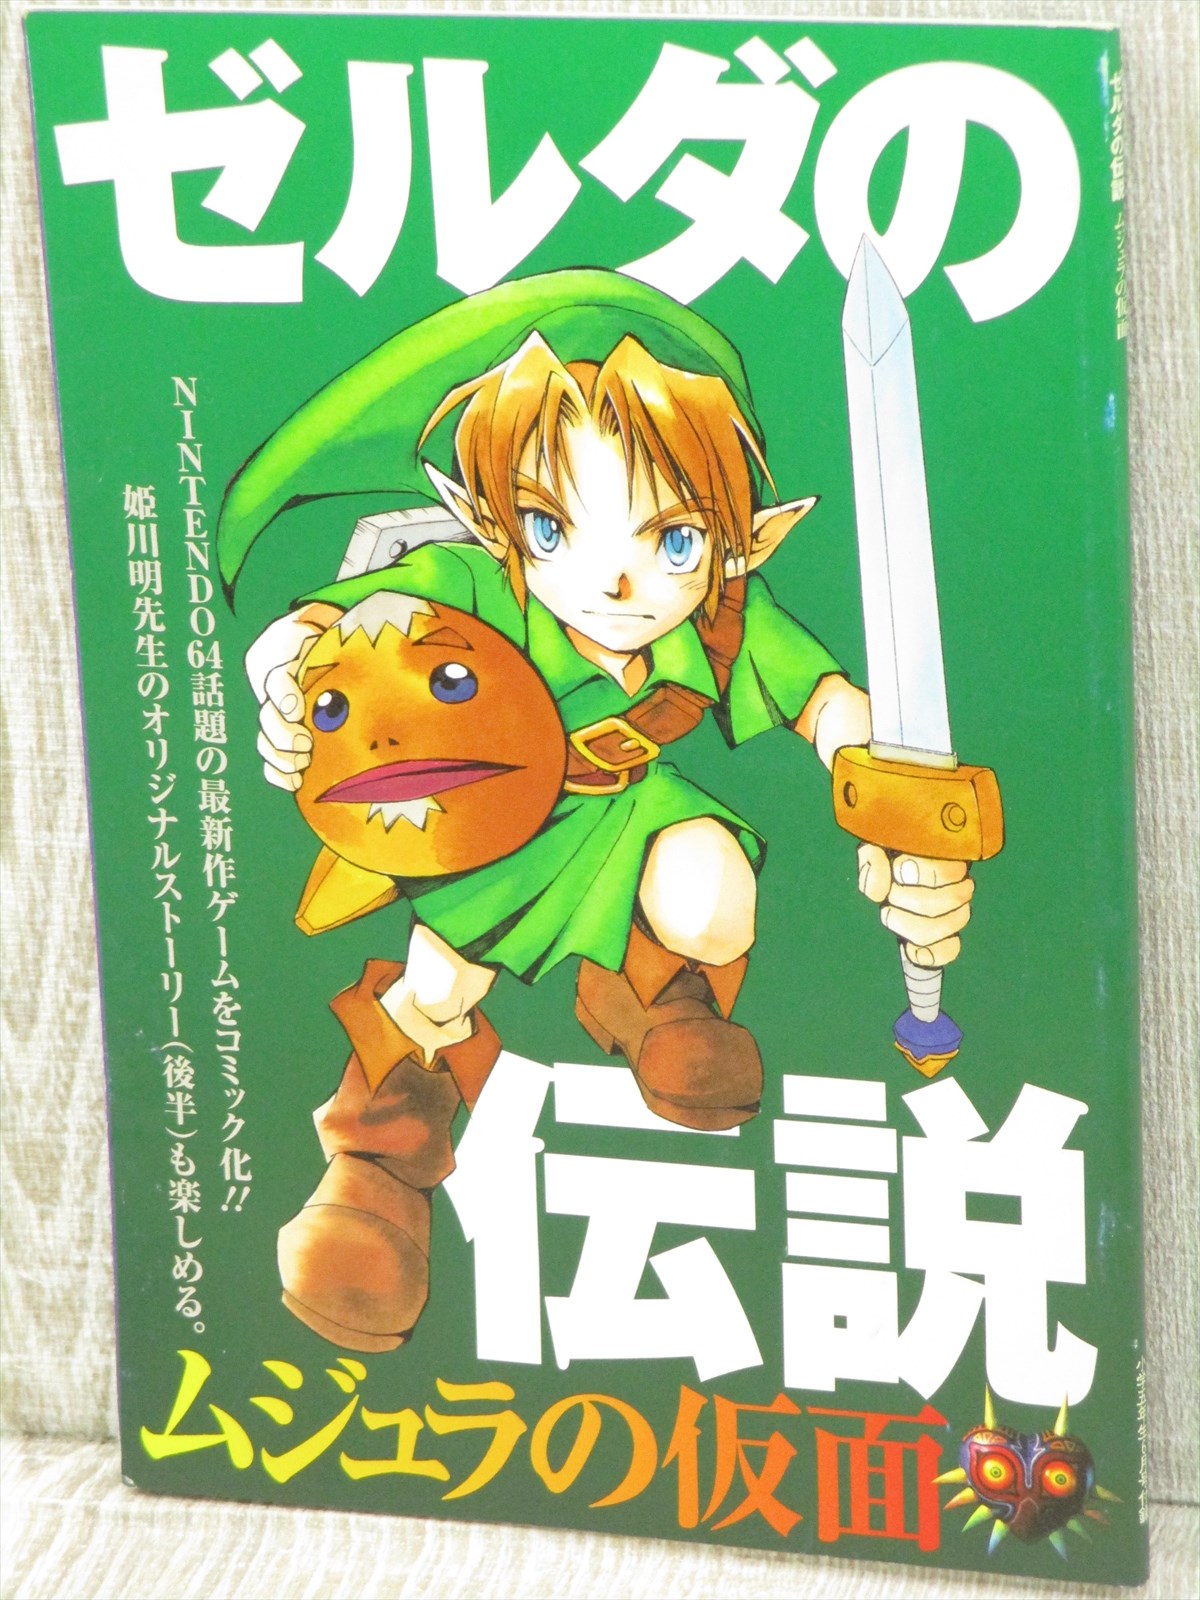 Legend Of Zelda Ltd Manga Comic Akira Himekawa 00 Japan Book Booklet Ebay